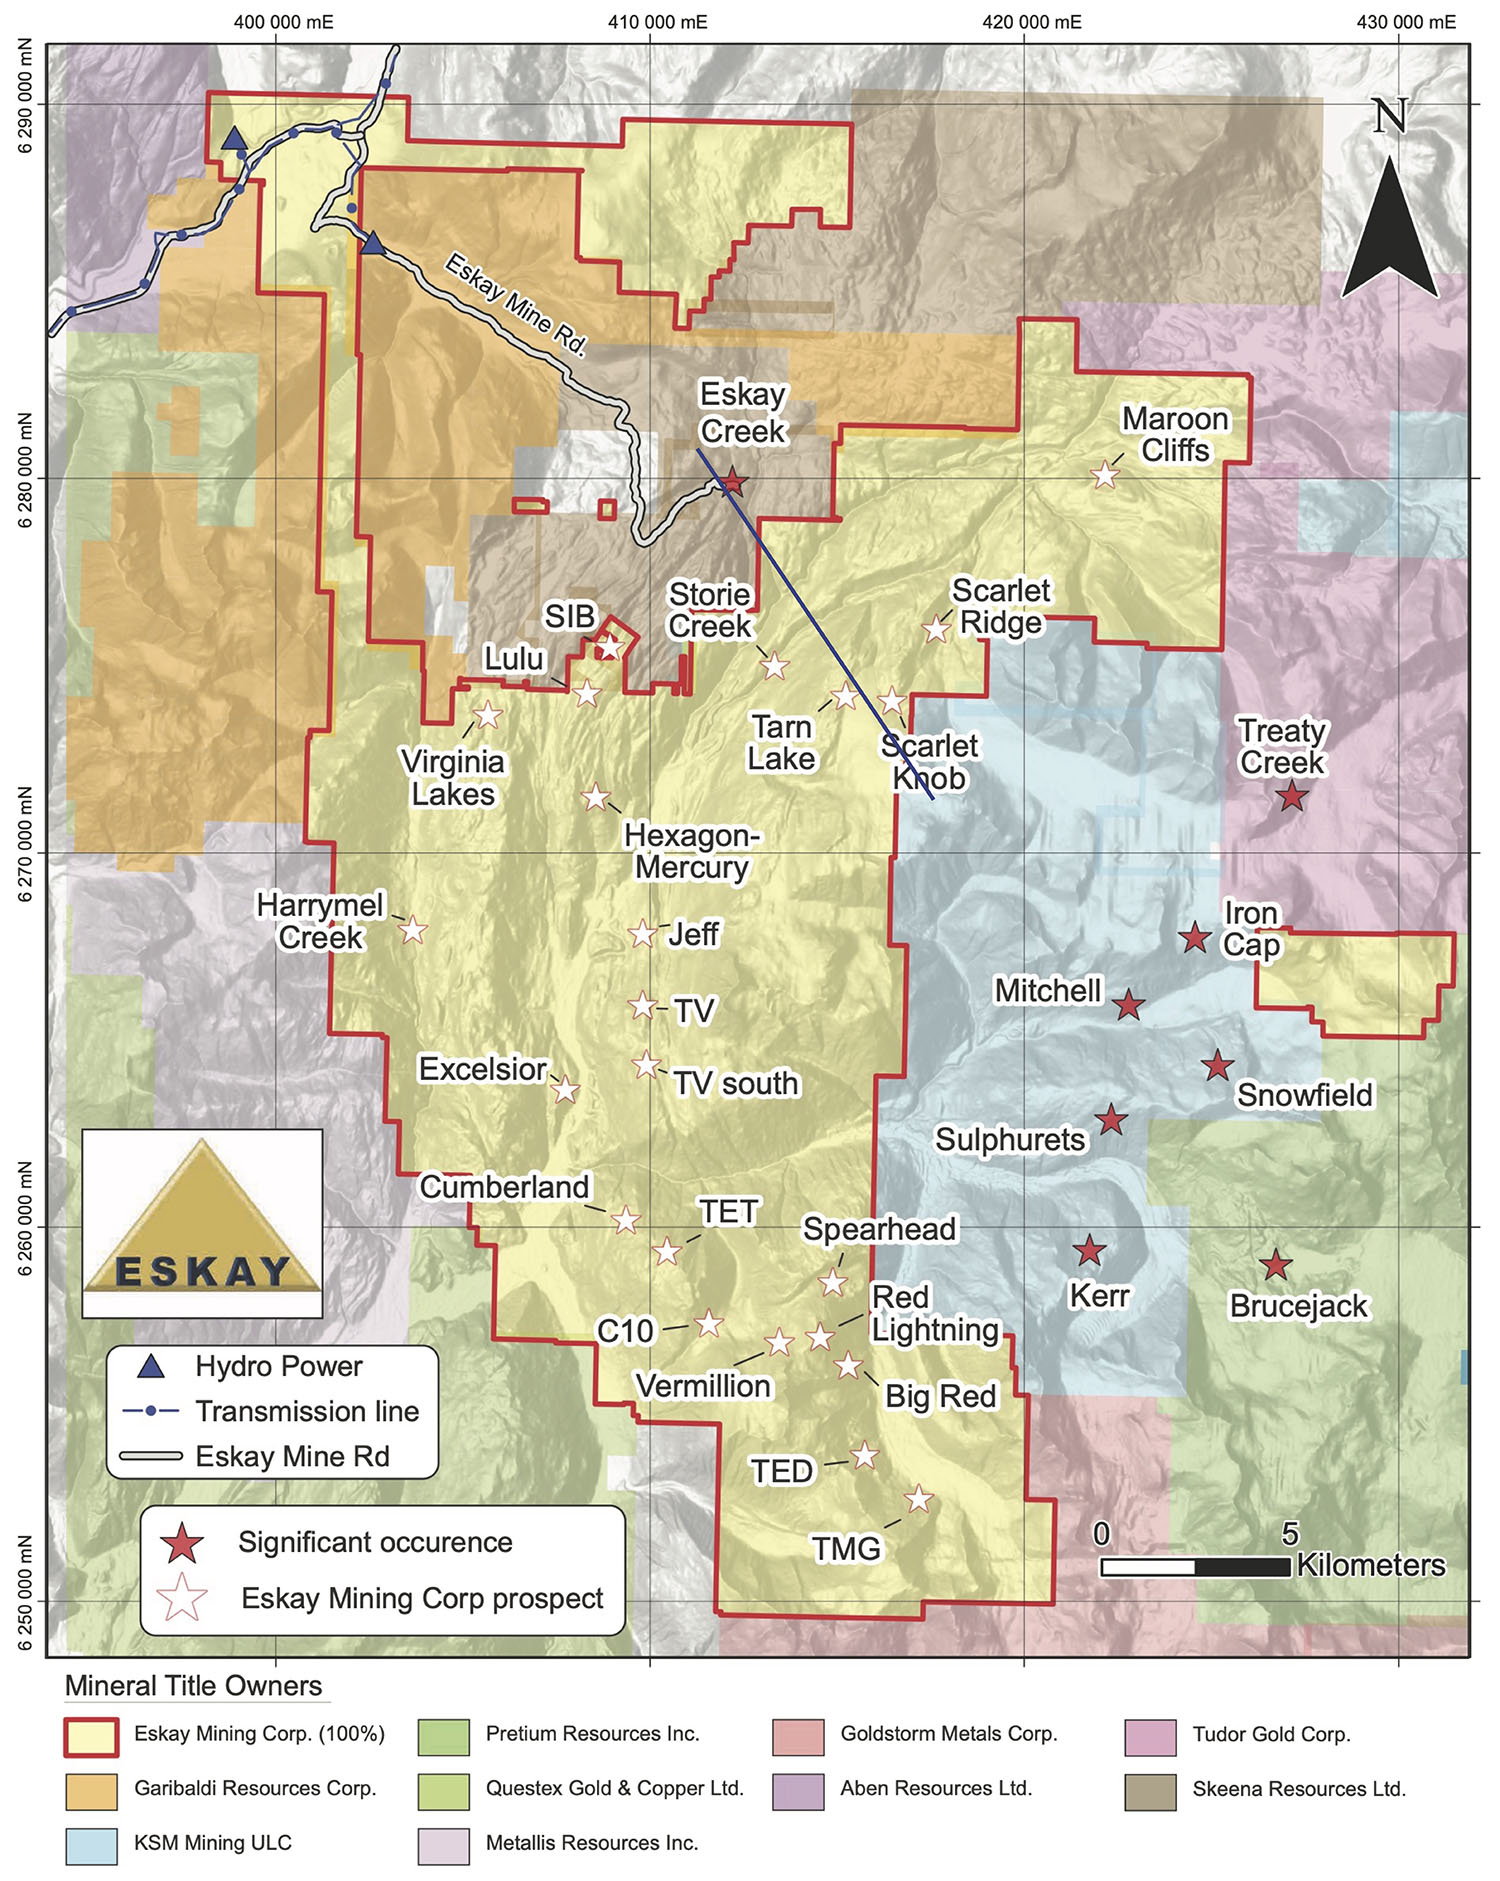 Eskay Mining Drills VMS Mineralization at Four New Targets at its ...